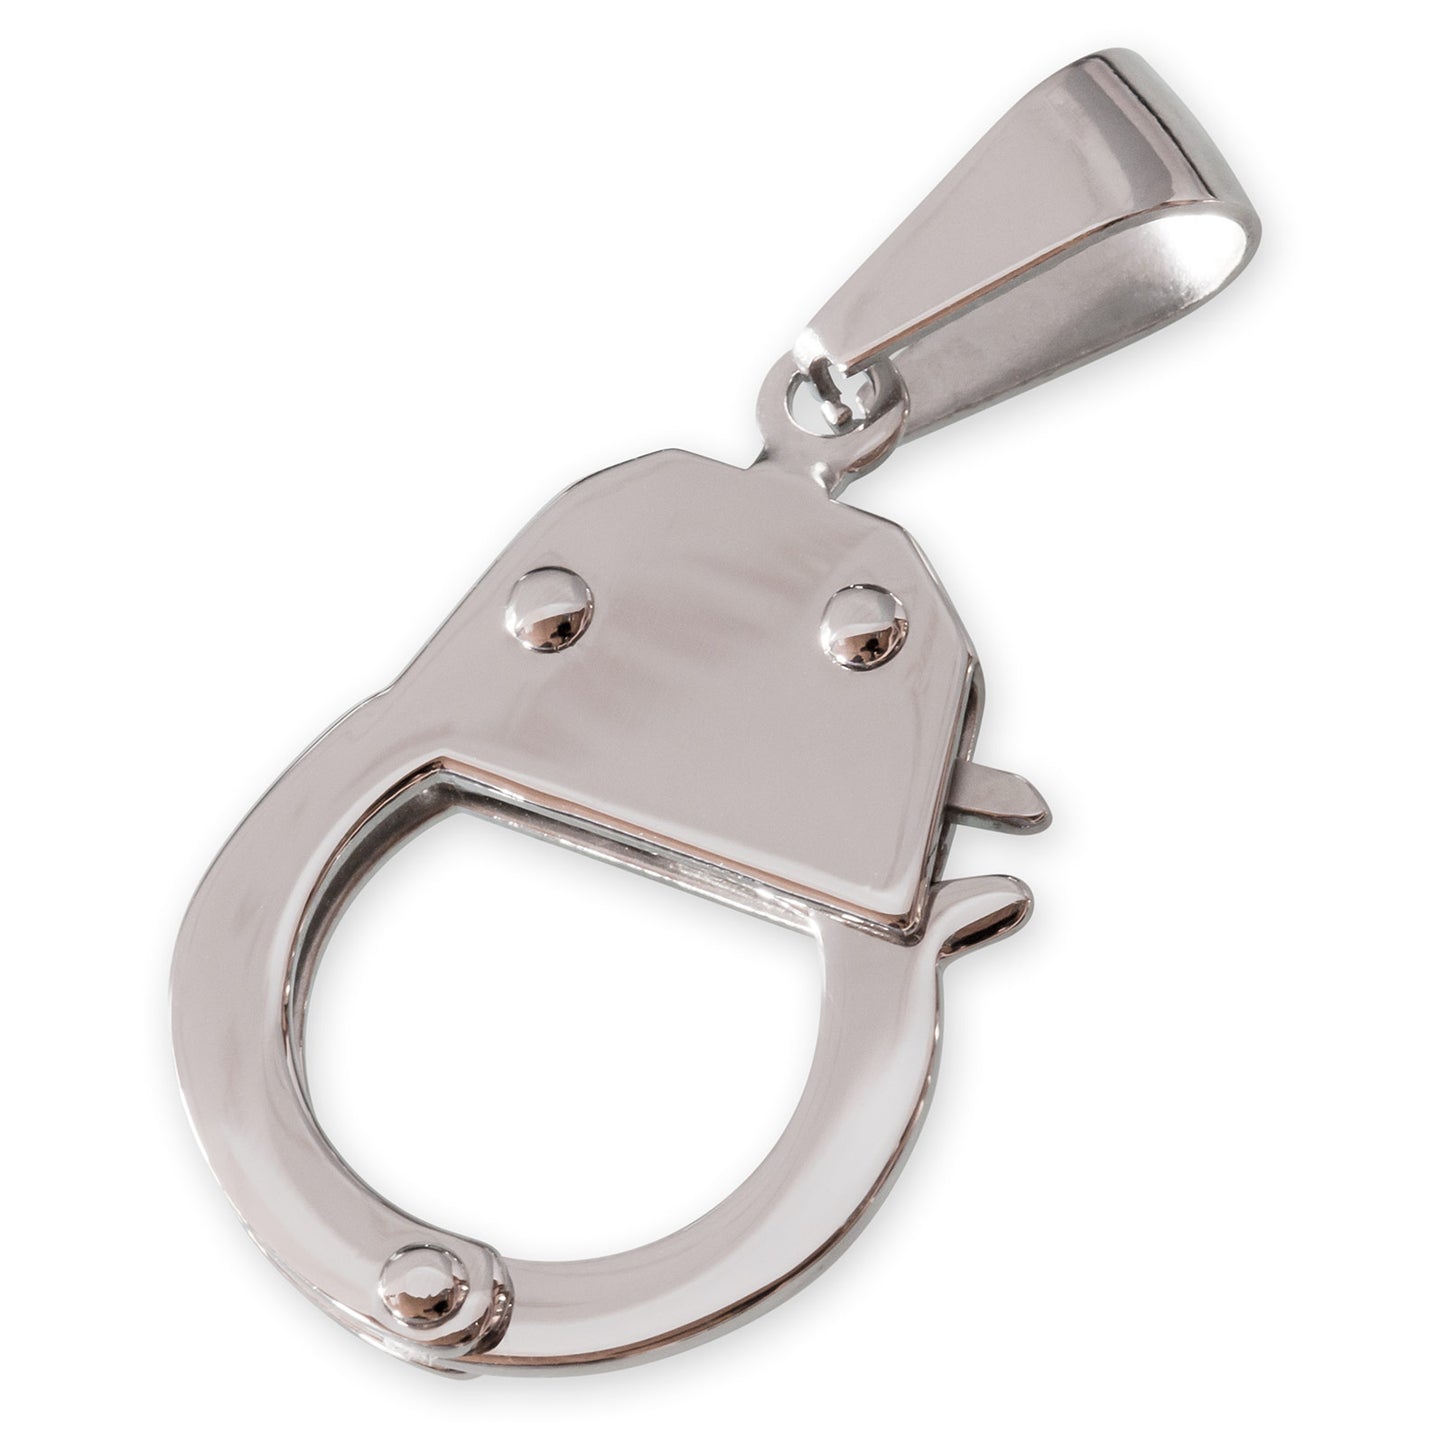 Stainless steel BDSM handcuff pendant